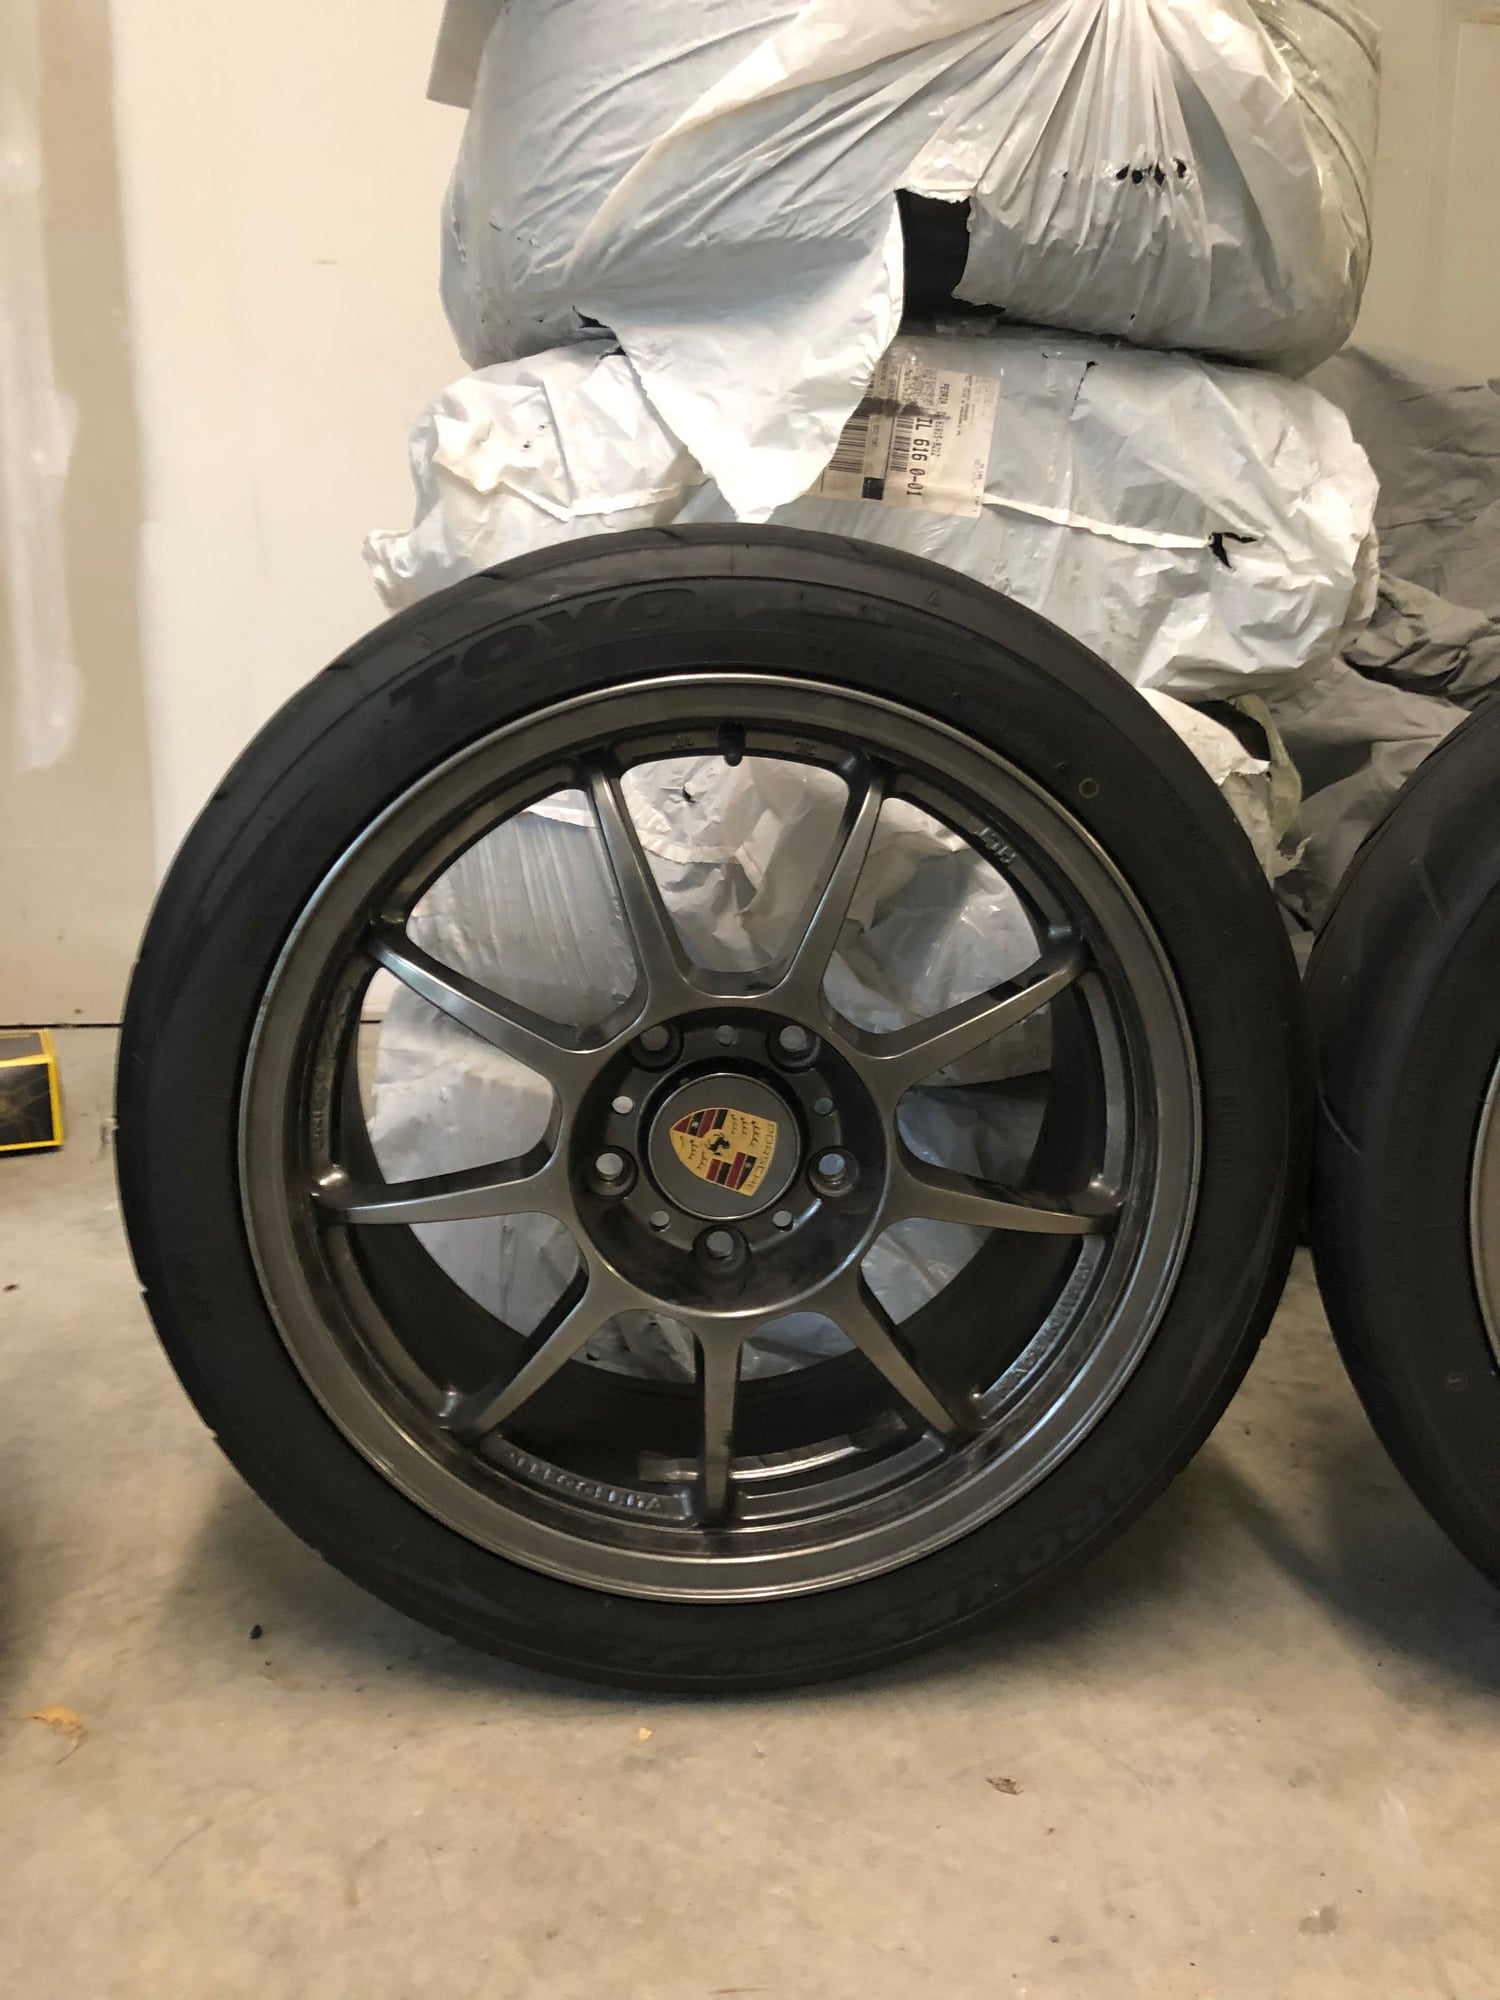 Wheels and Tires/Axles - 18" OZ allegerita wheels - Used - Peoria, IL 61616, United States